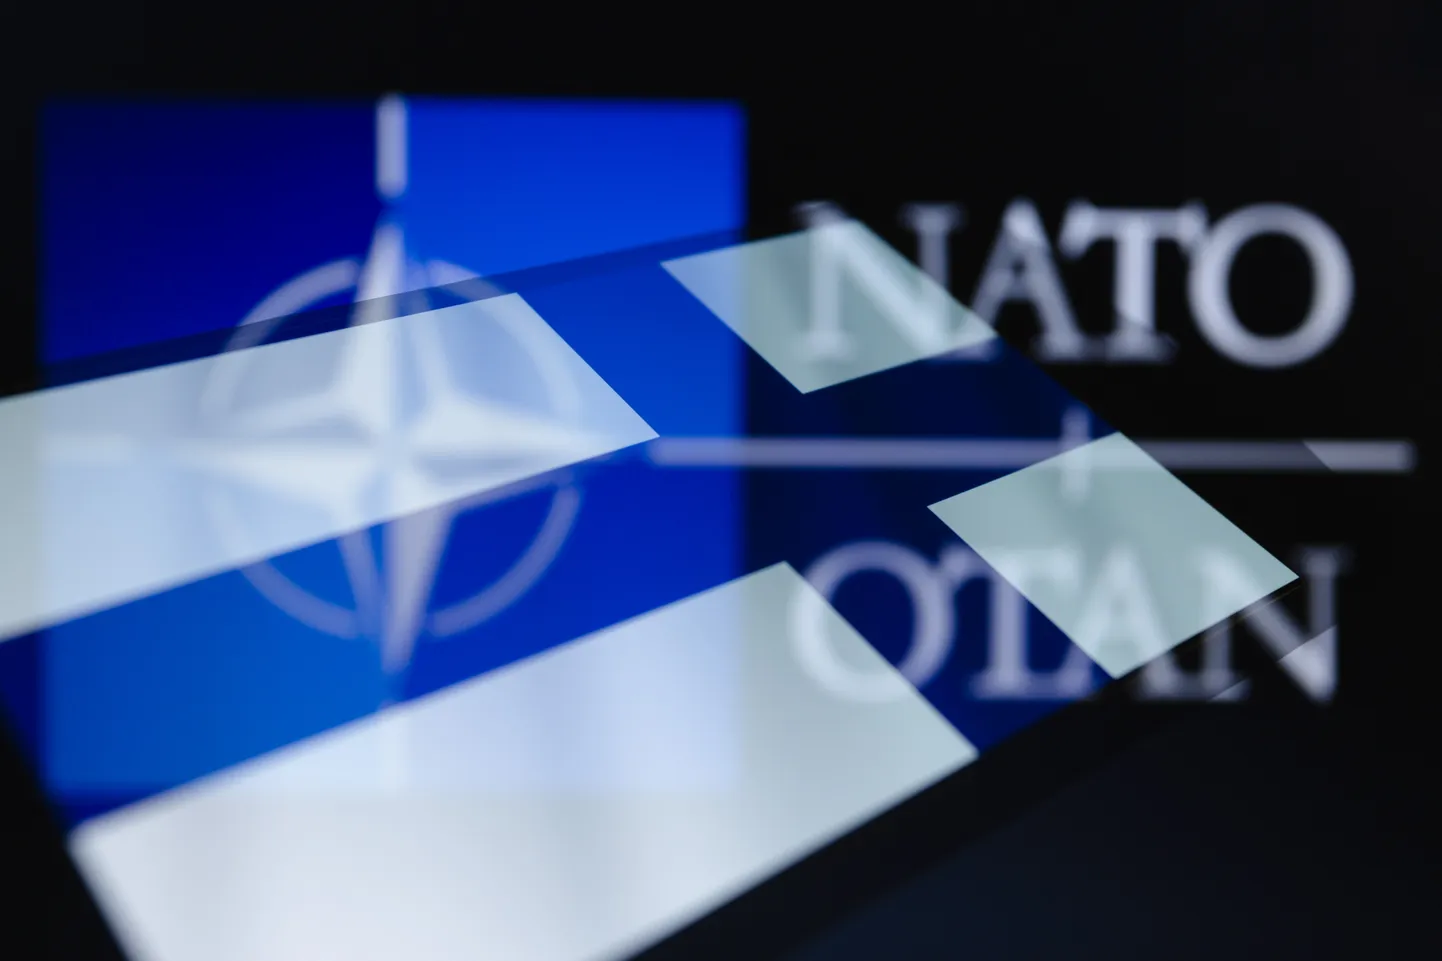 Soome lipp ja NATO logo. Foto on illustratiivne.